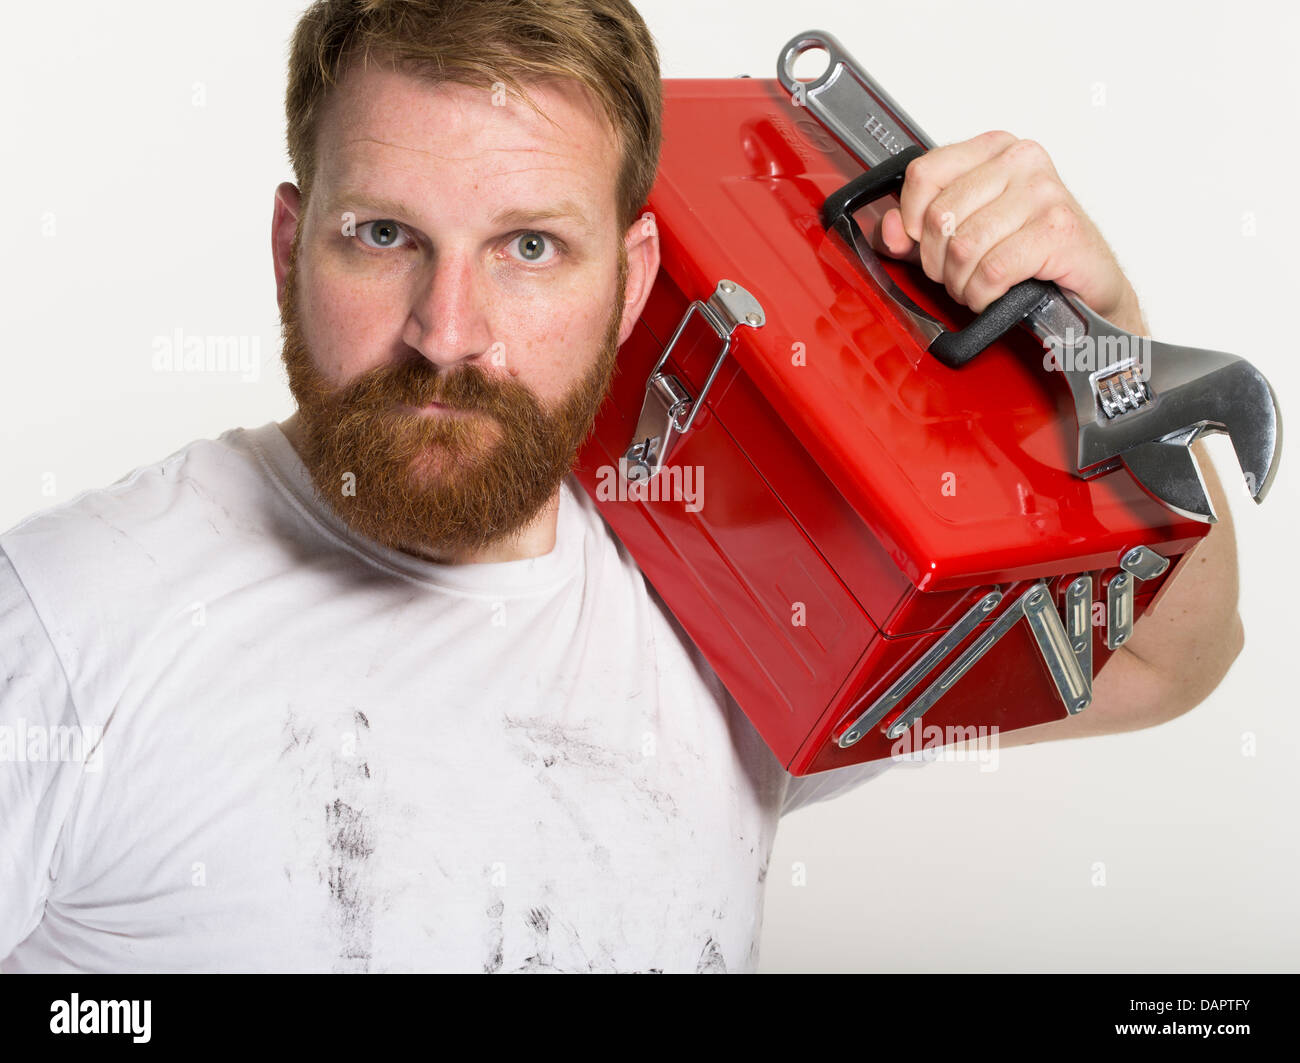 Mechanic / handyman / janitor with spanner Stock Photo